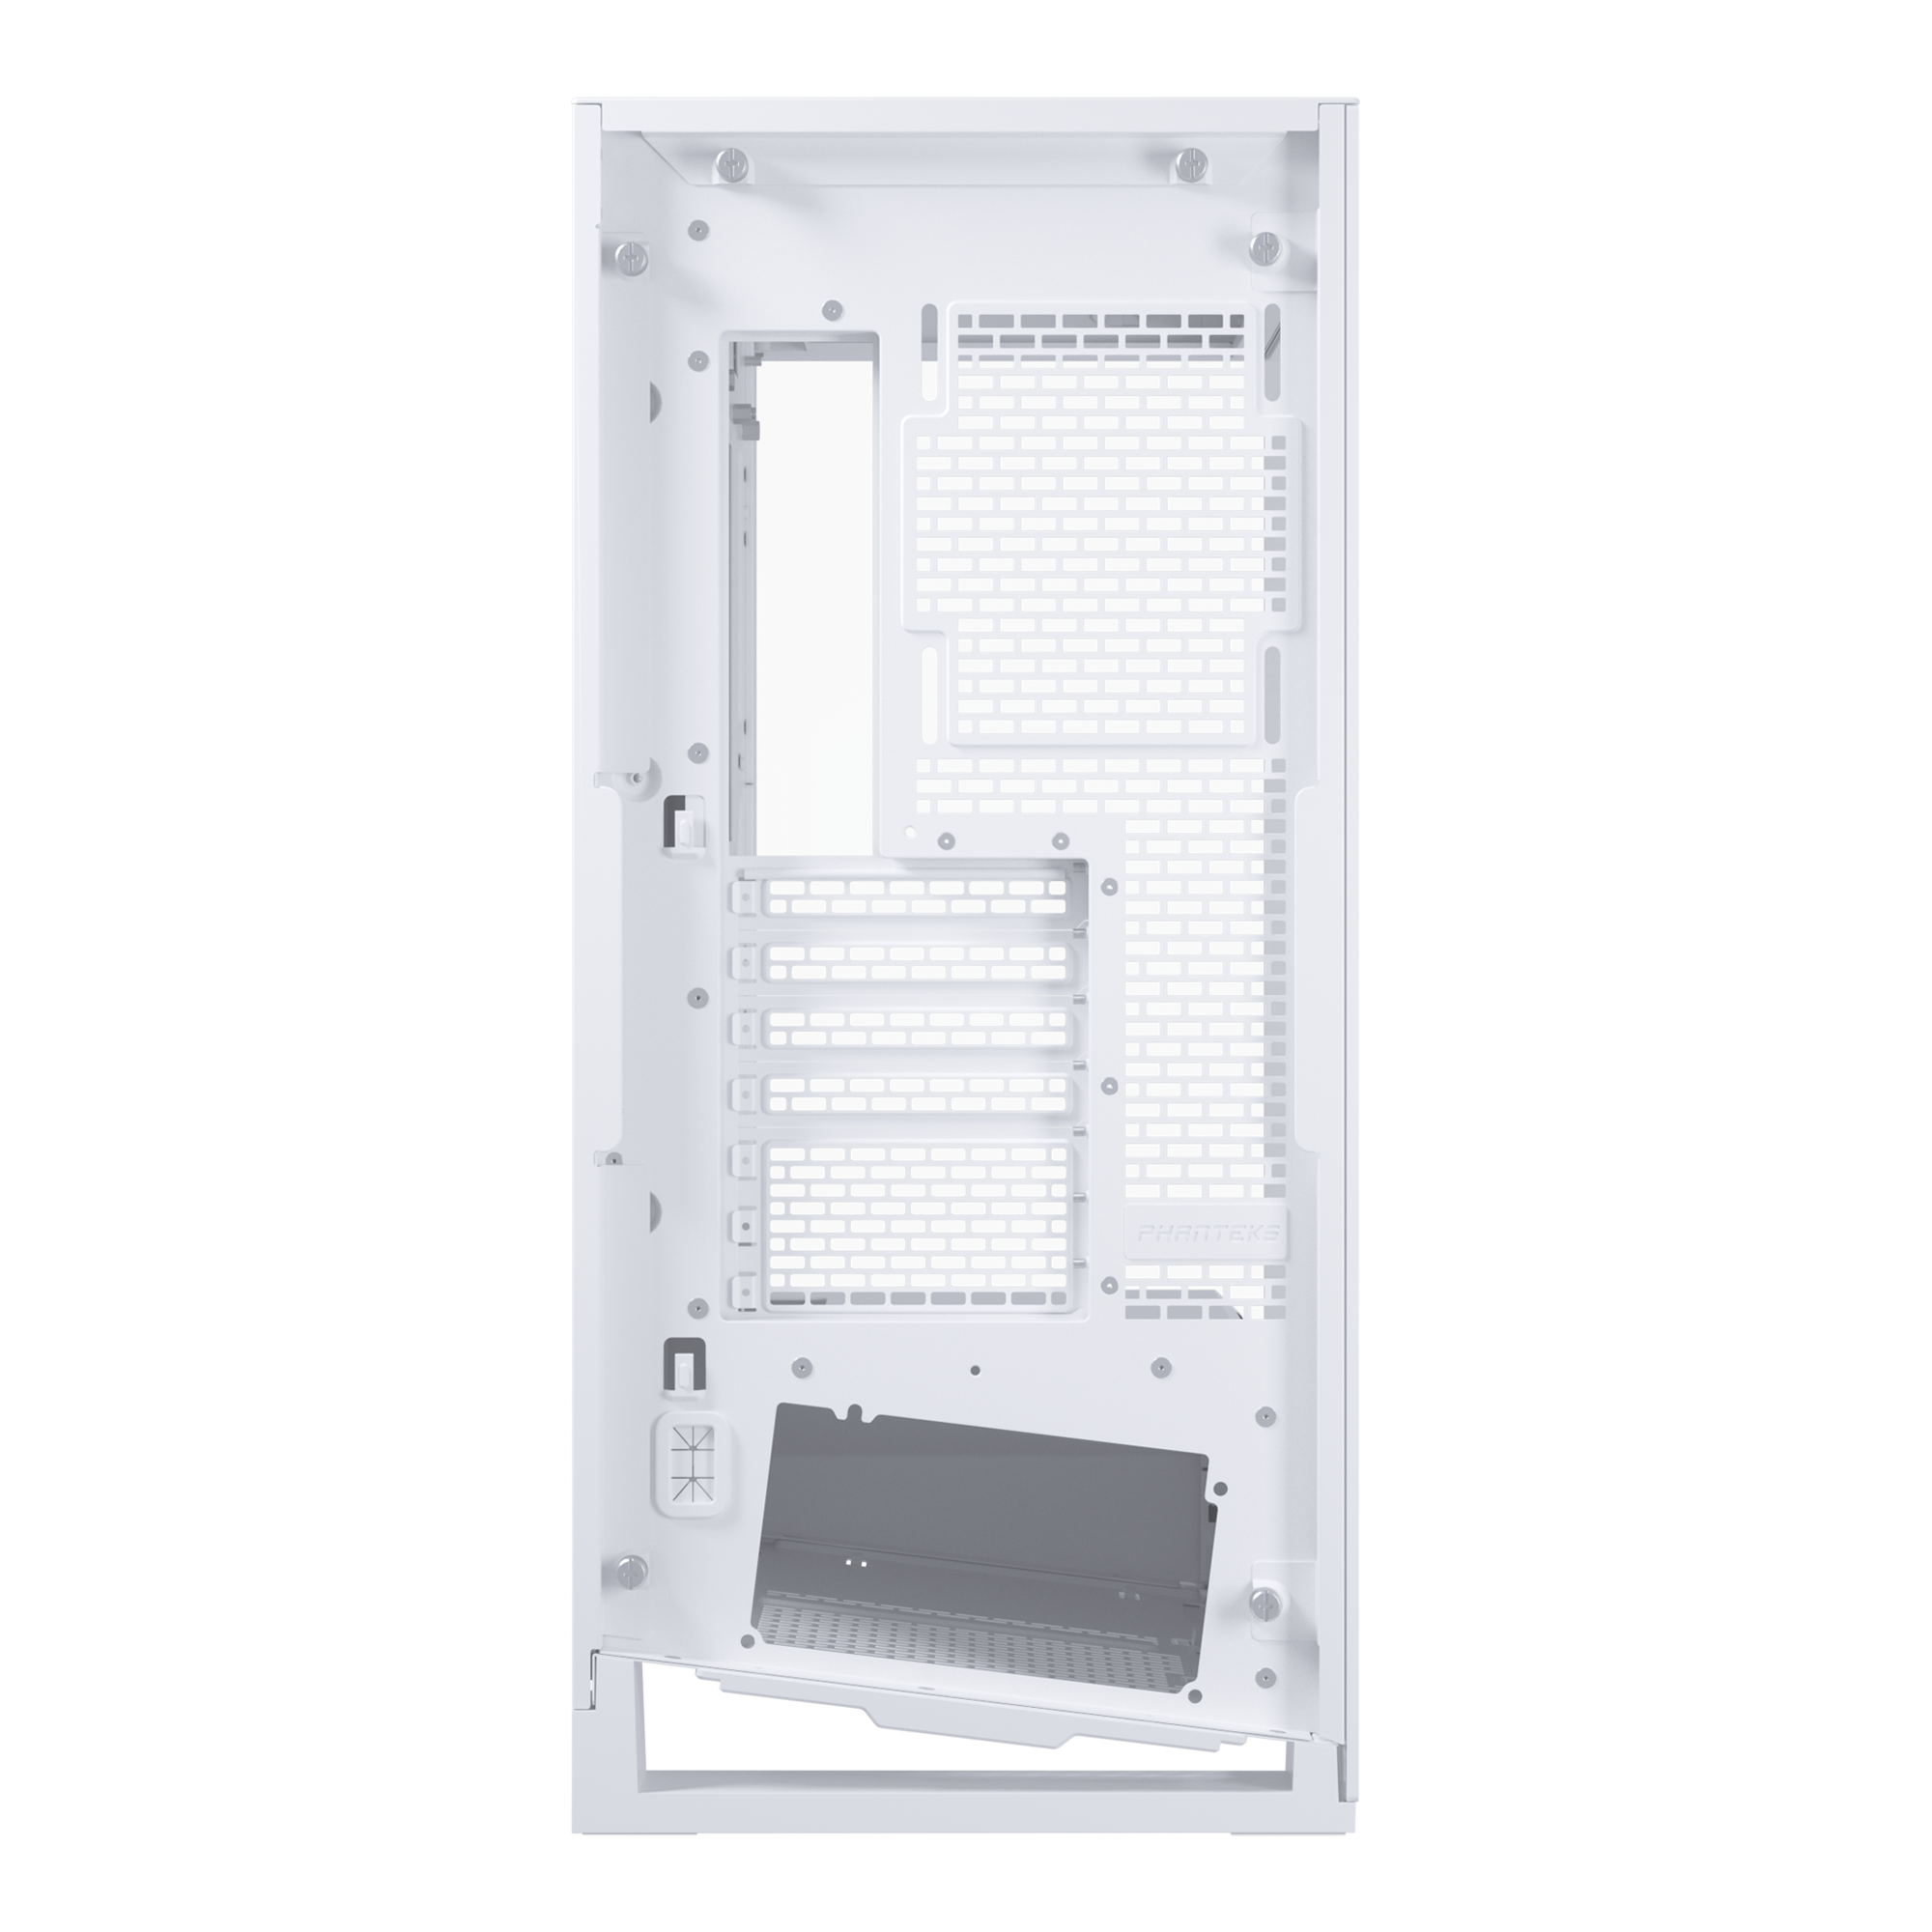 Phanteks - Phanteks NV5 Mid-Tower Showcase PC Case – White, Tempered Glass